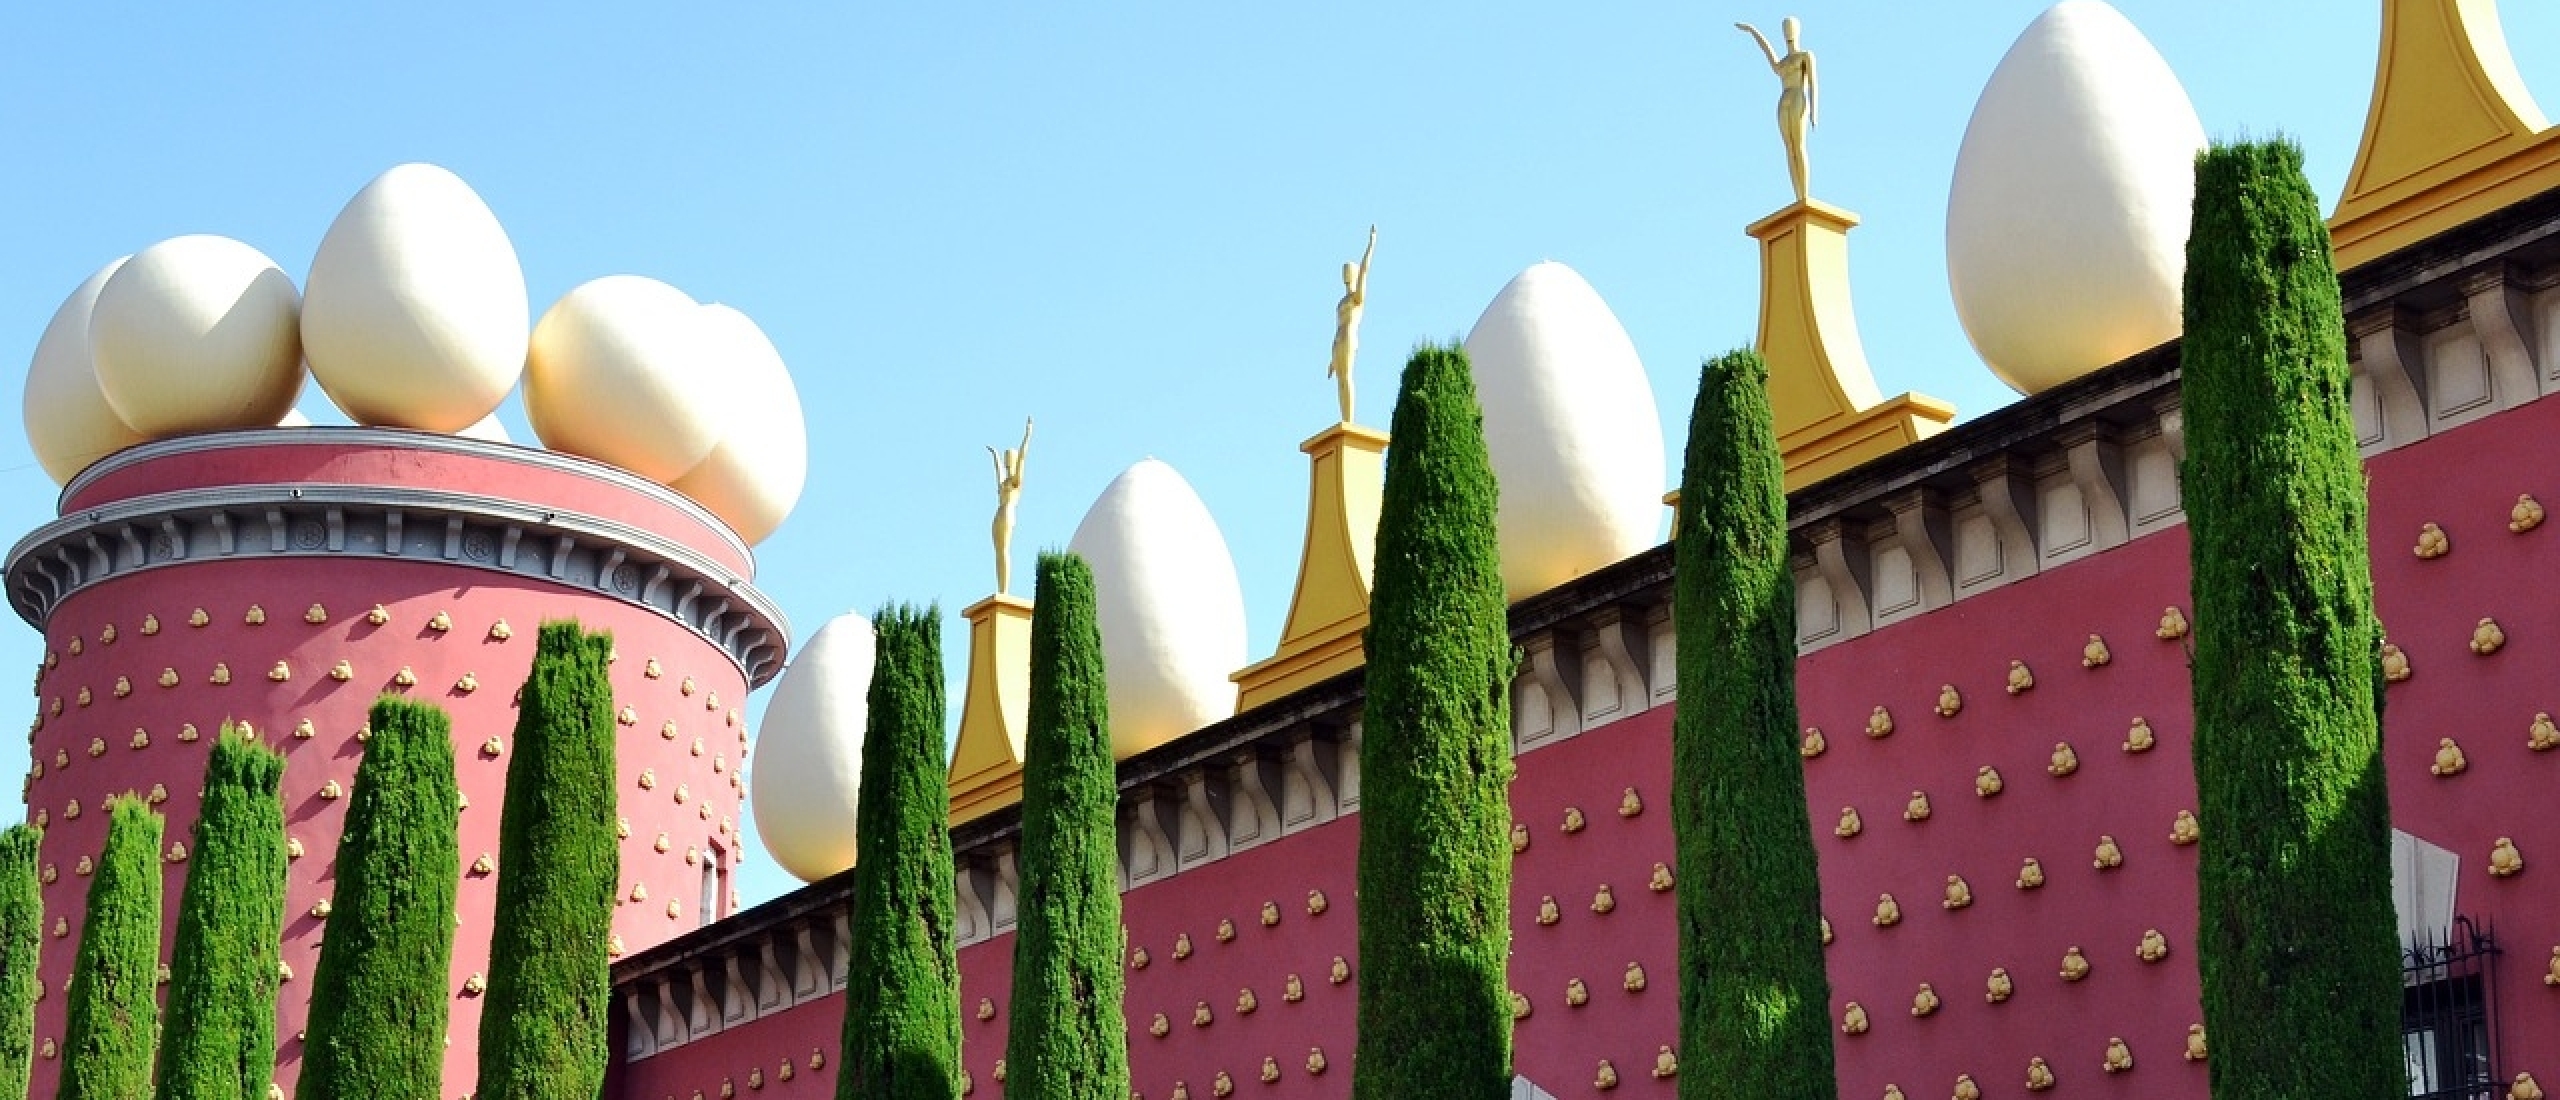 Catalunya, a landscape of inspiration for Dalí